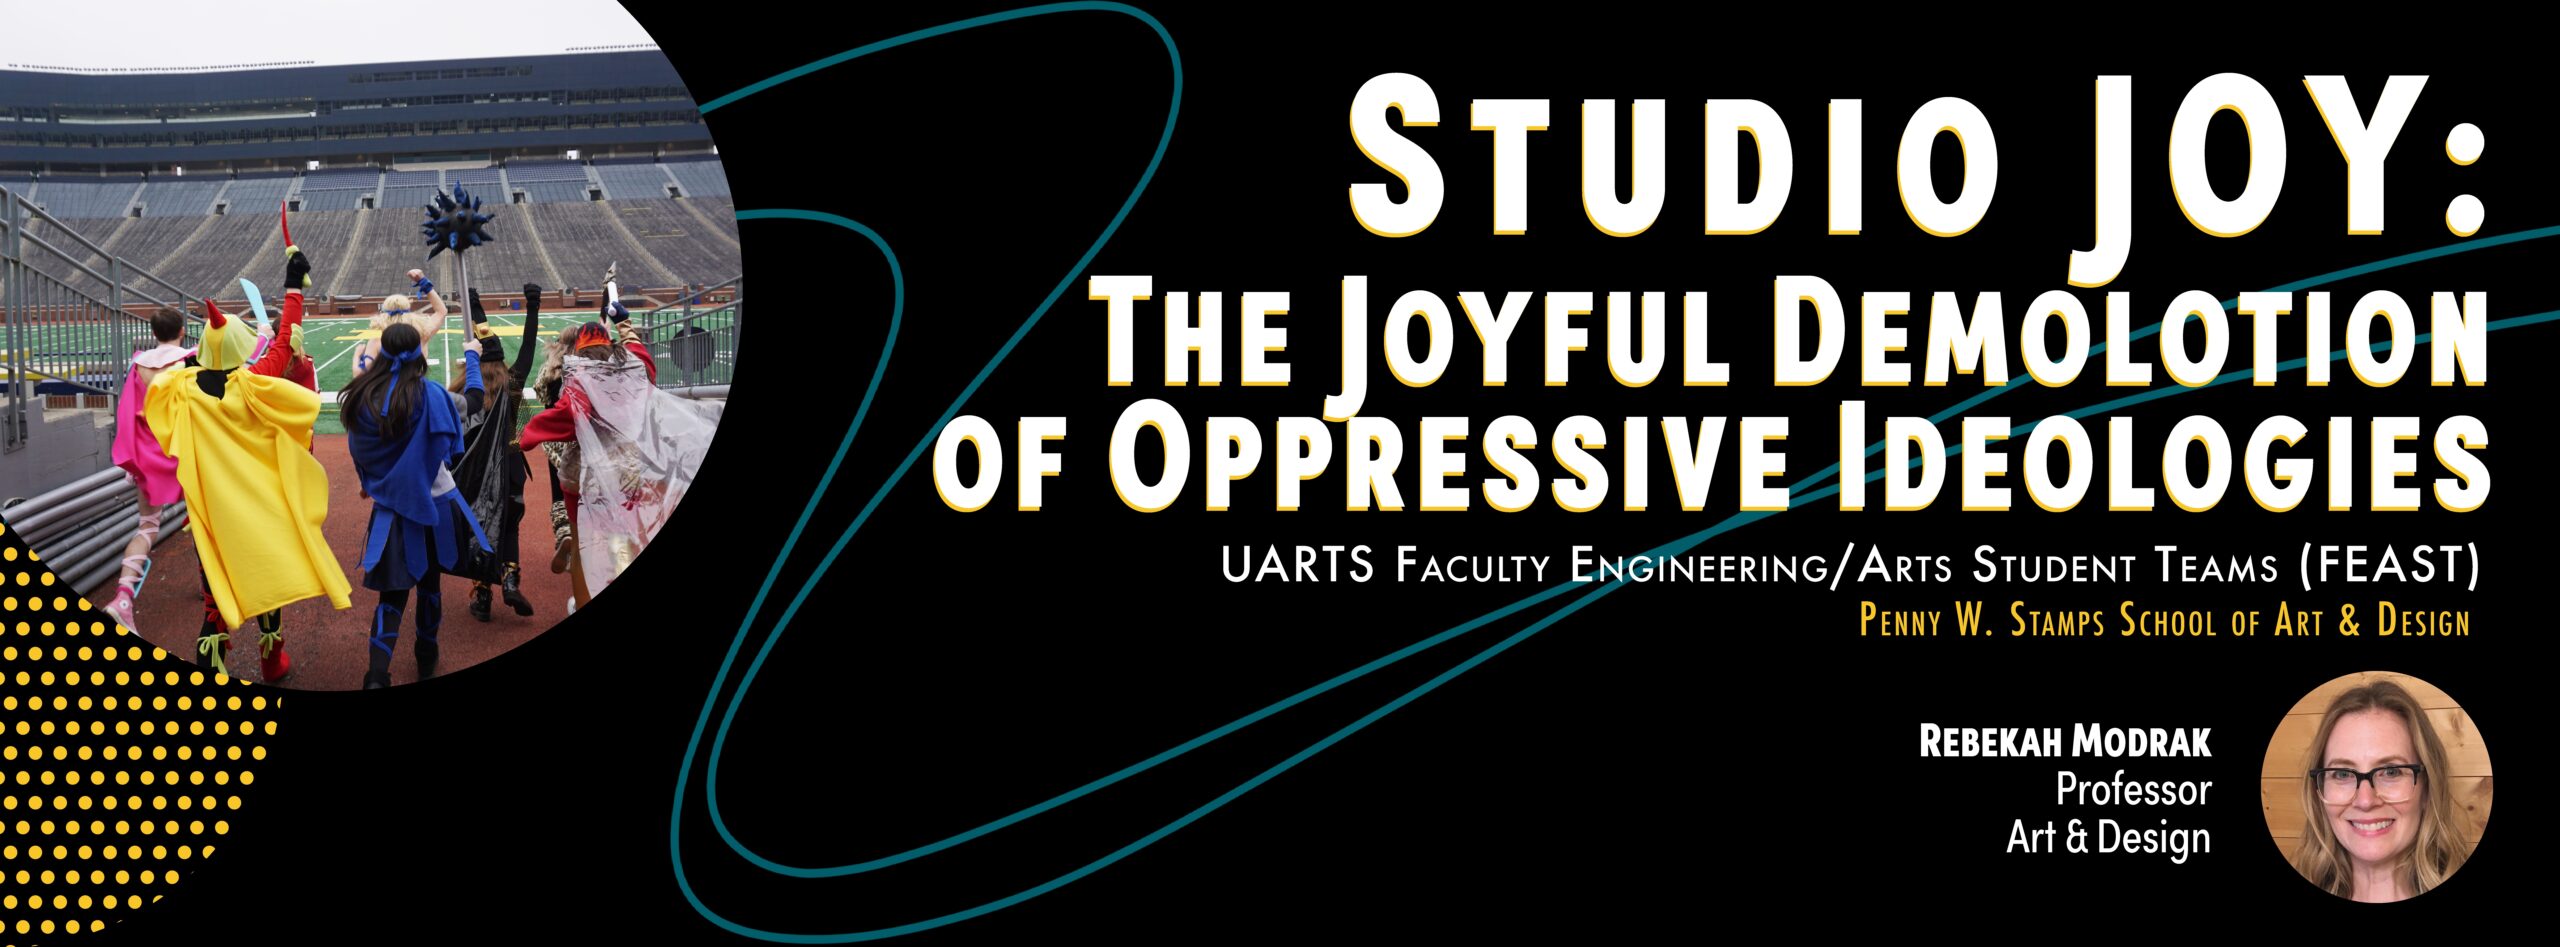 Studio Joy: The joyful demolotion of oppressive ideologies card